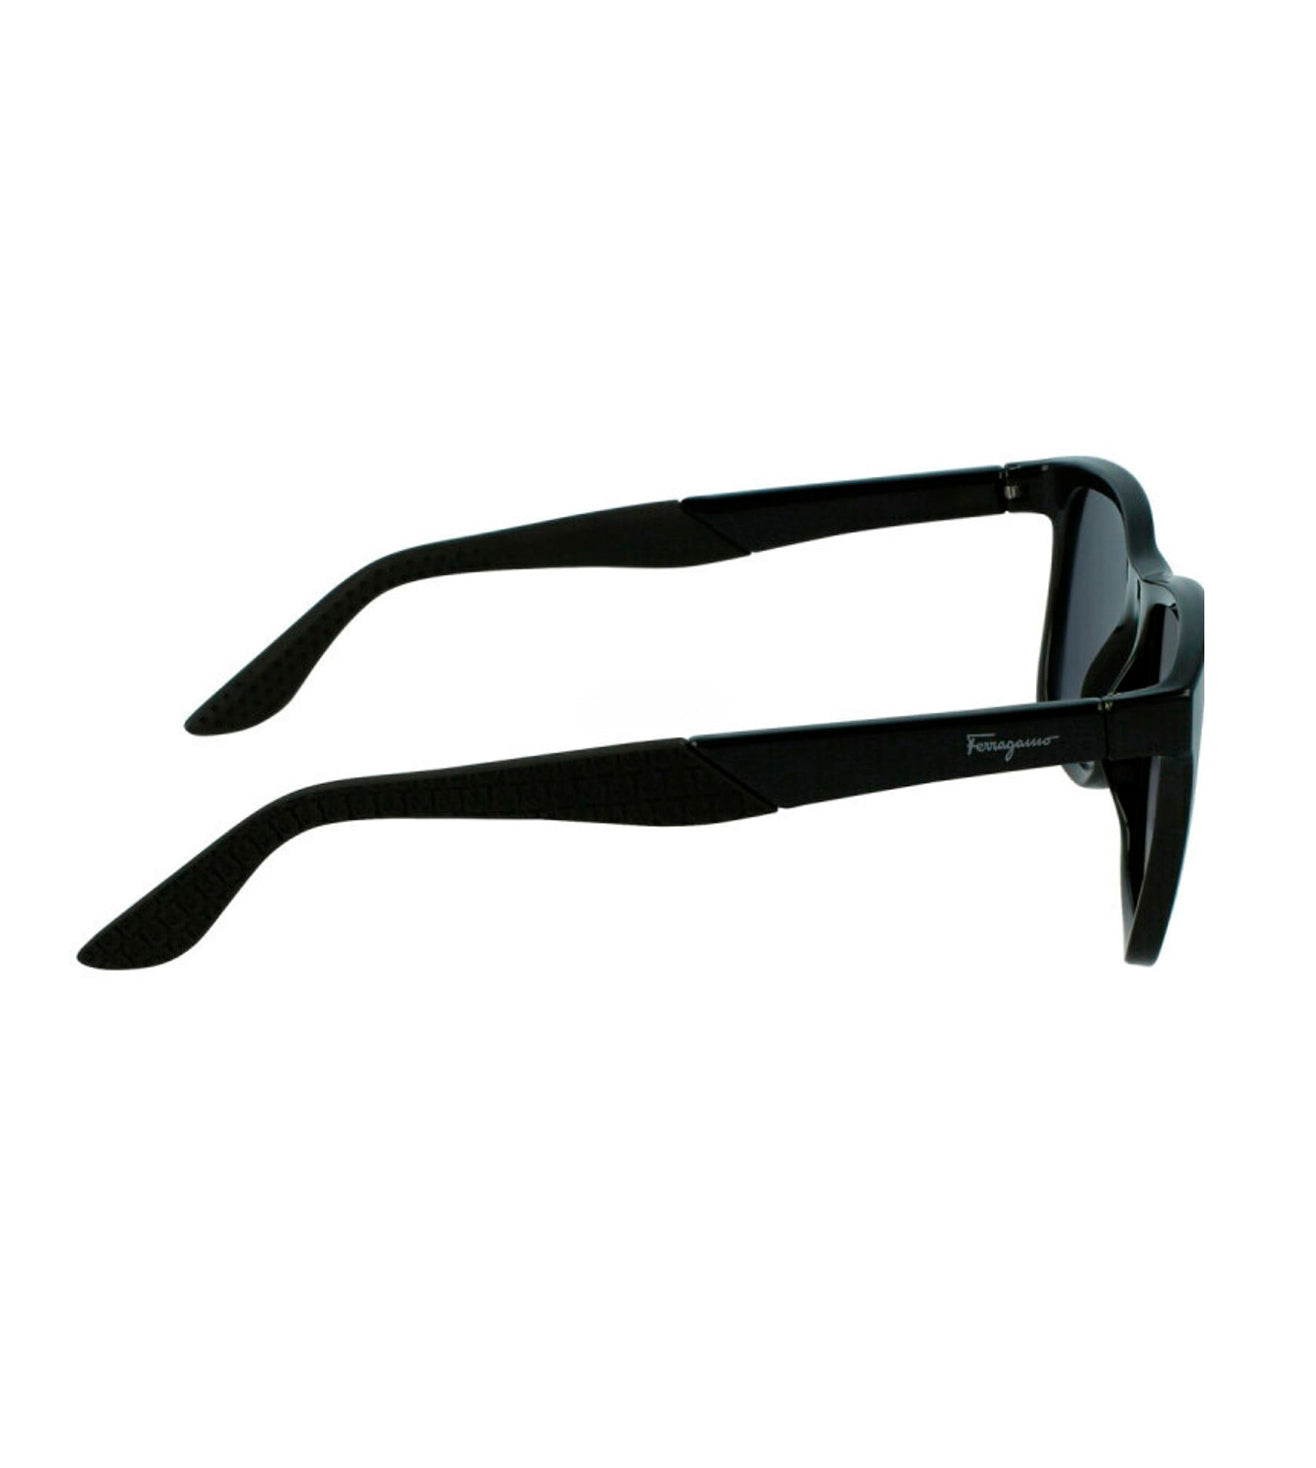 Salvatore Ferragamo Men's Black Shaded Square Sunglasses